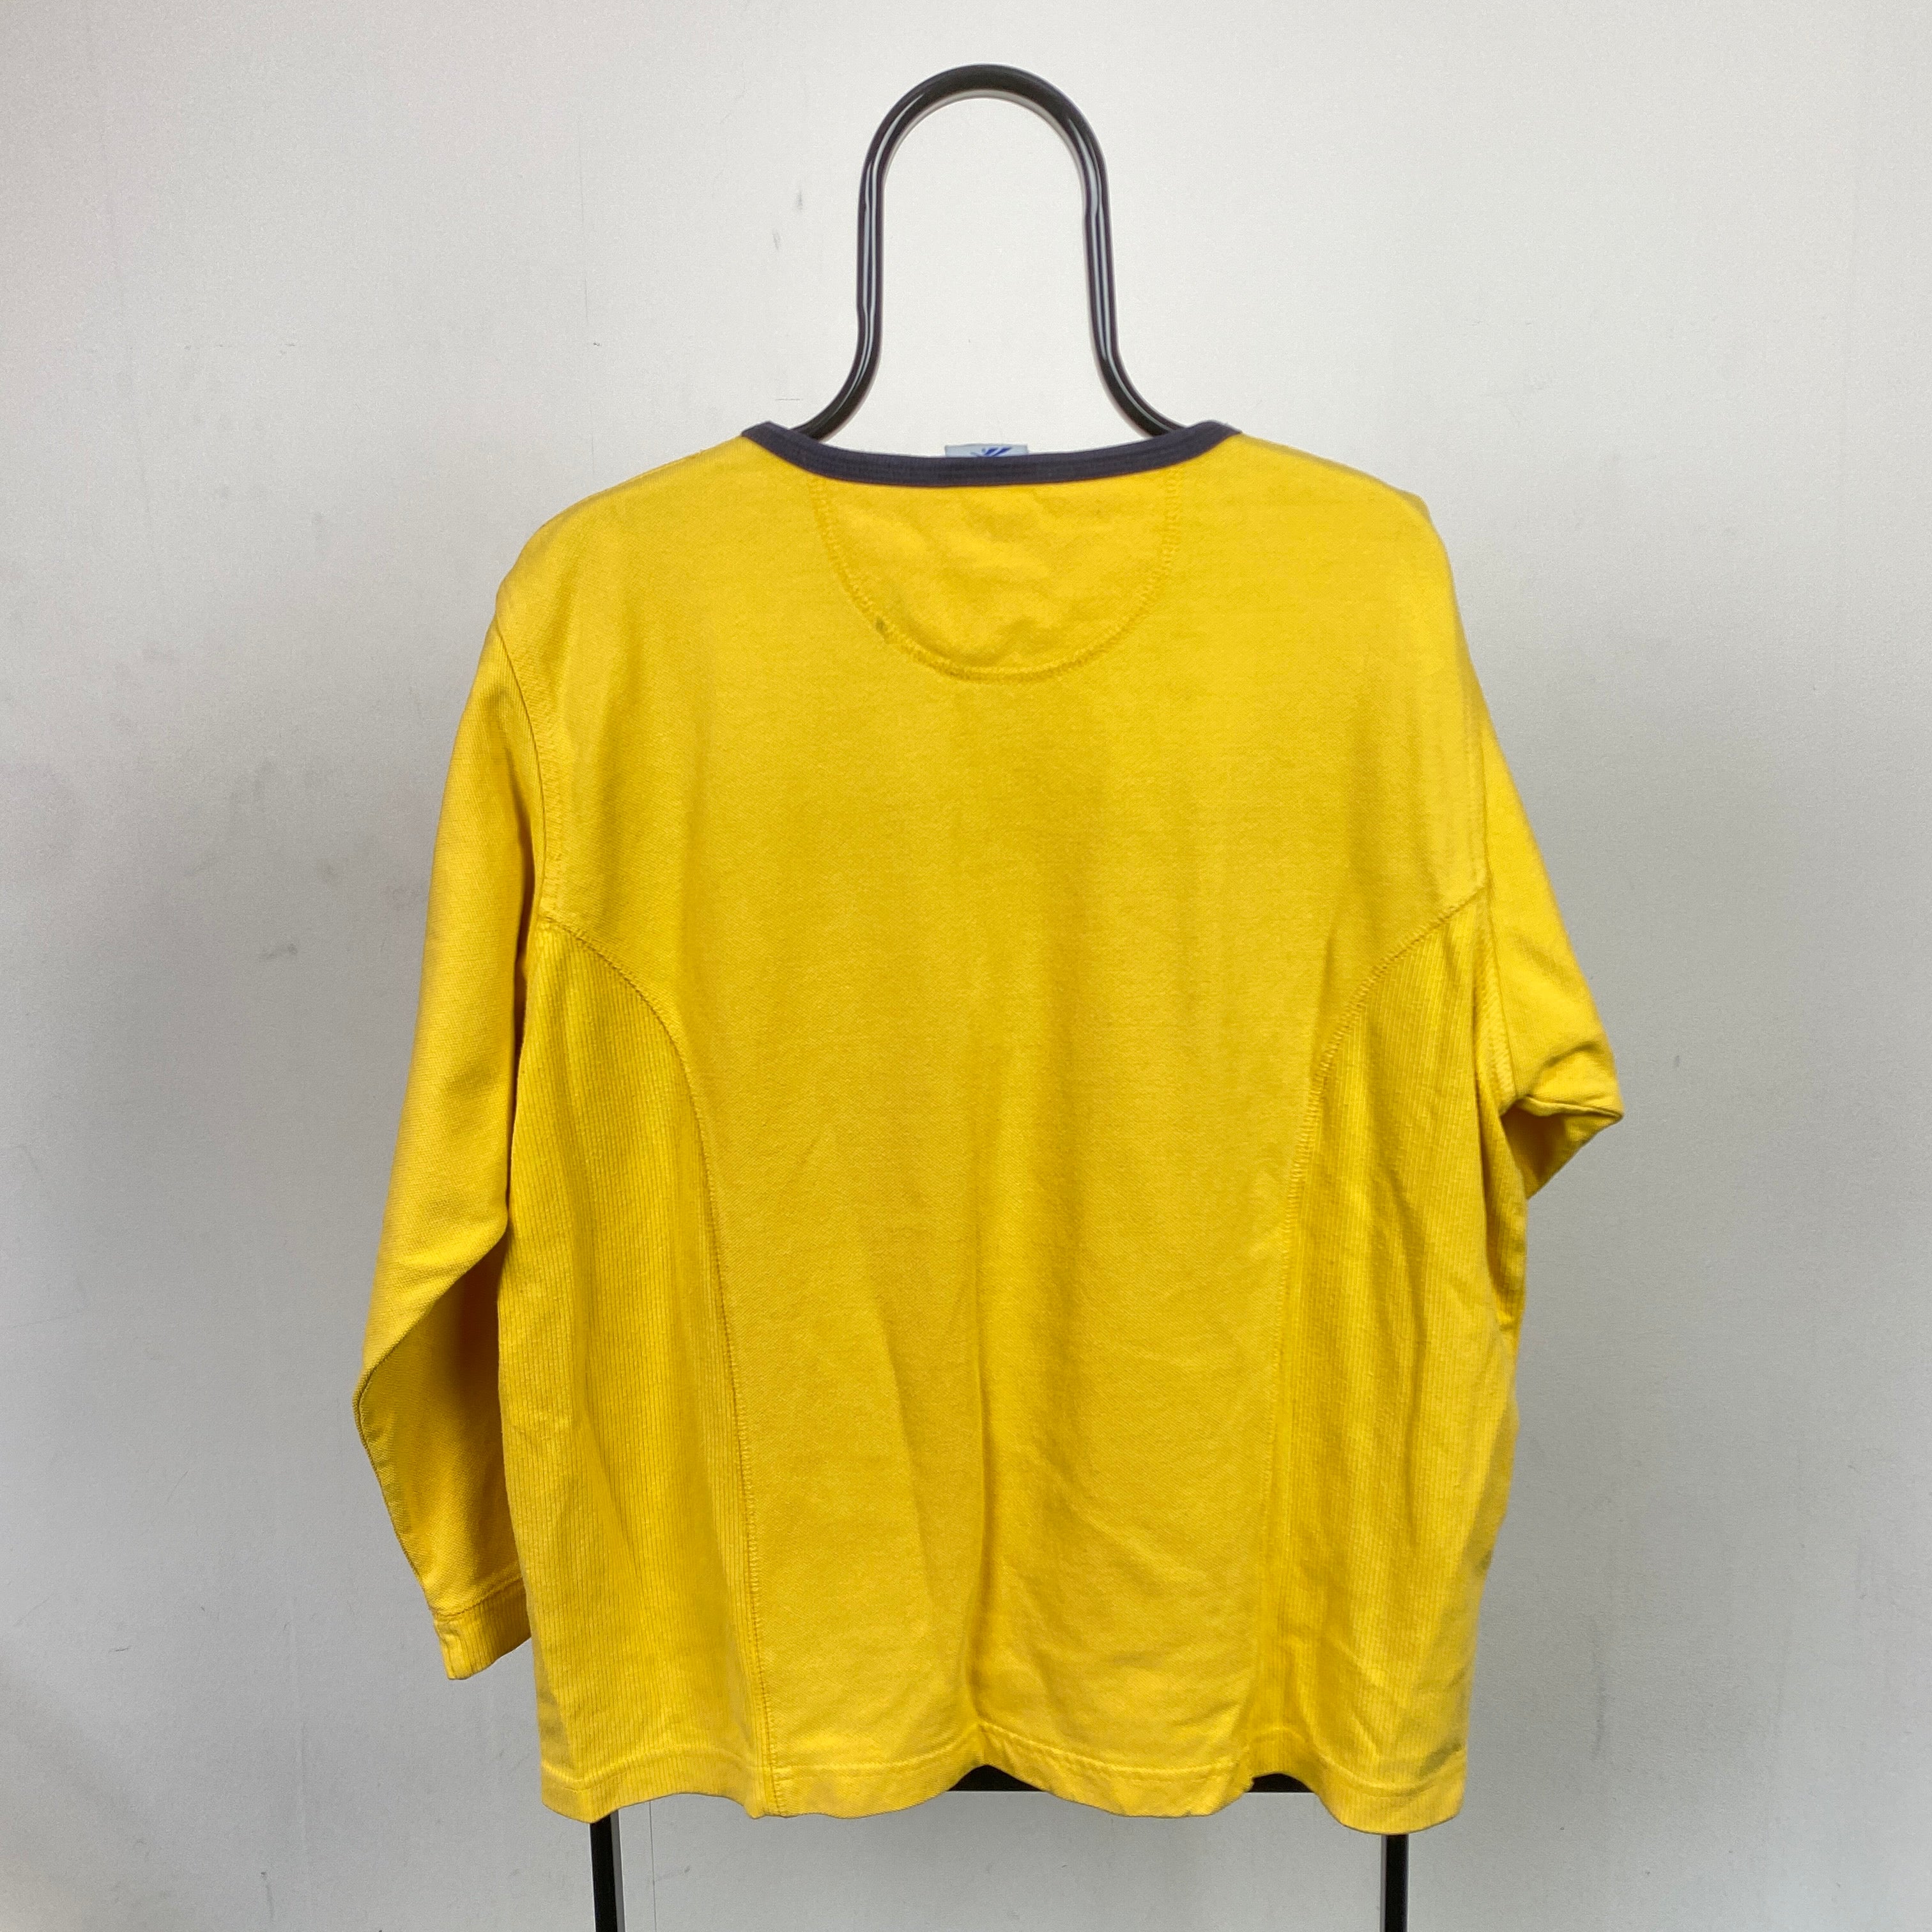 Retro Reebok Sweatshirt Yellow XXL